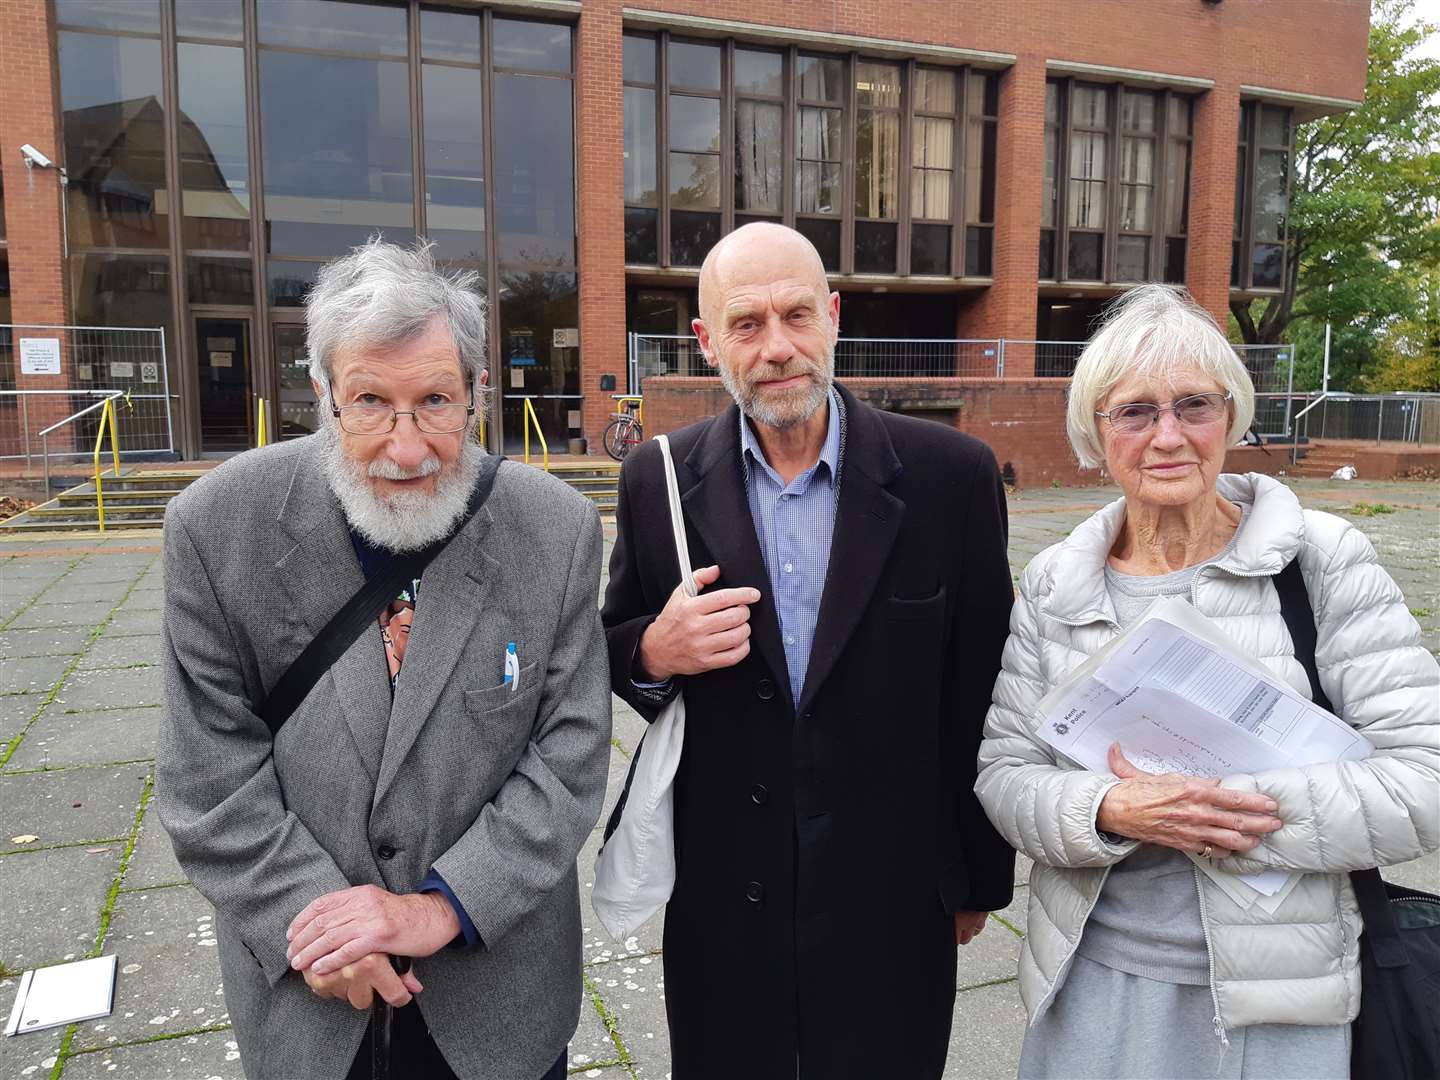 John Lynes, John Halladay and Ursula Pethick at Folkestone Magistrates' Court